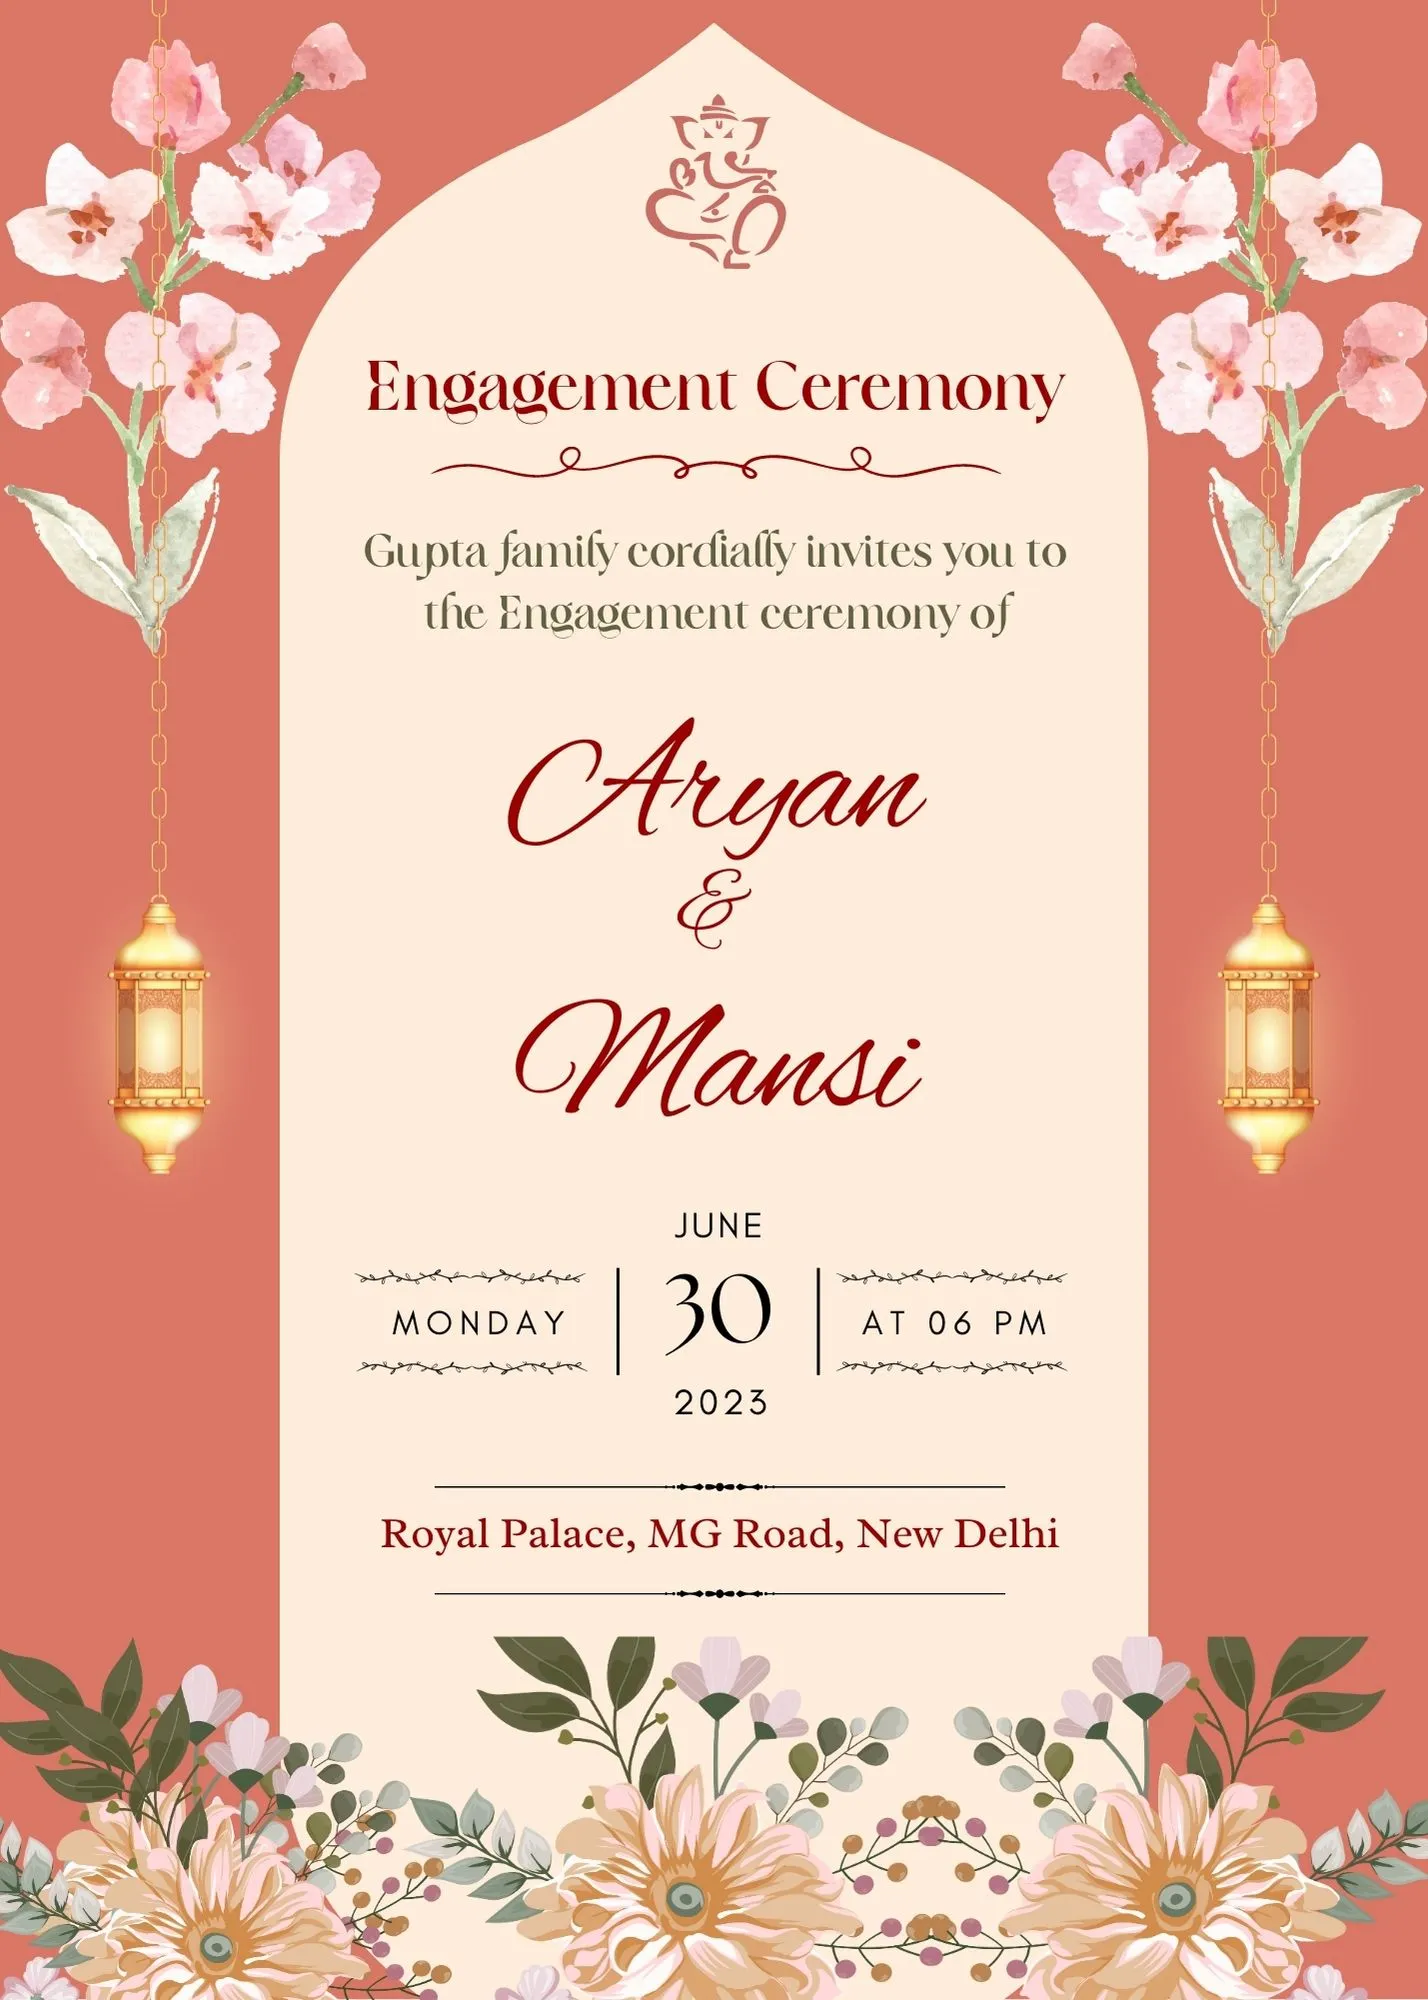 Engagement ceremony invitation lovely